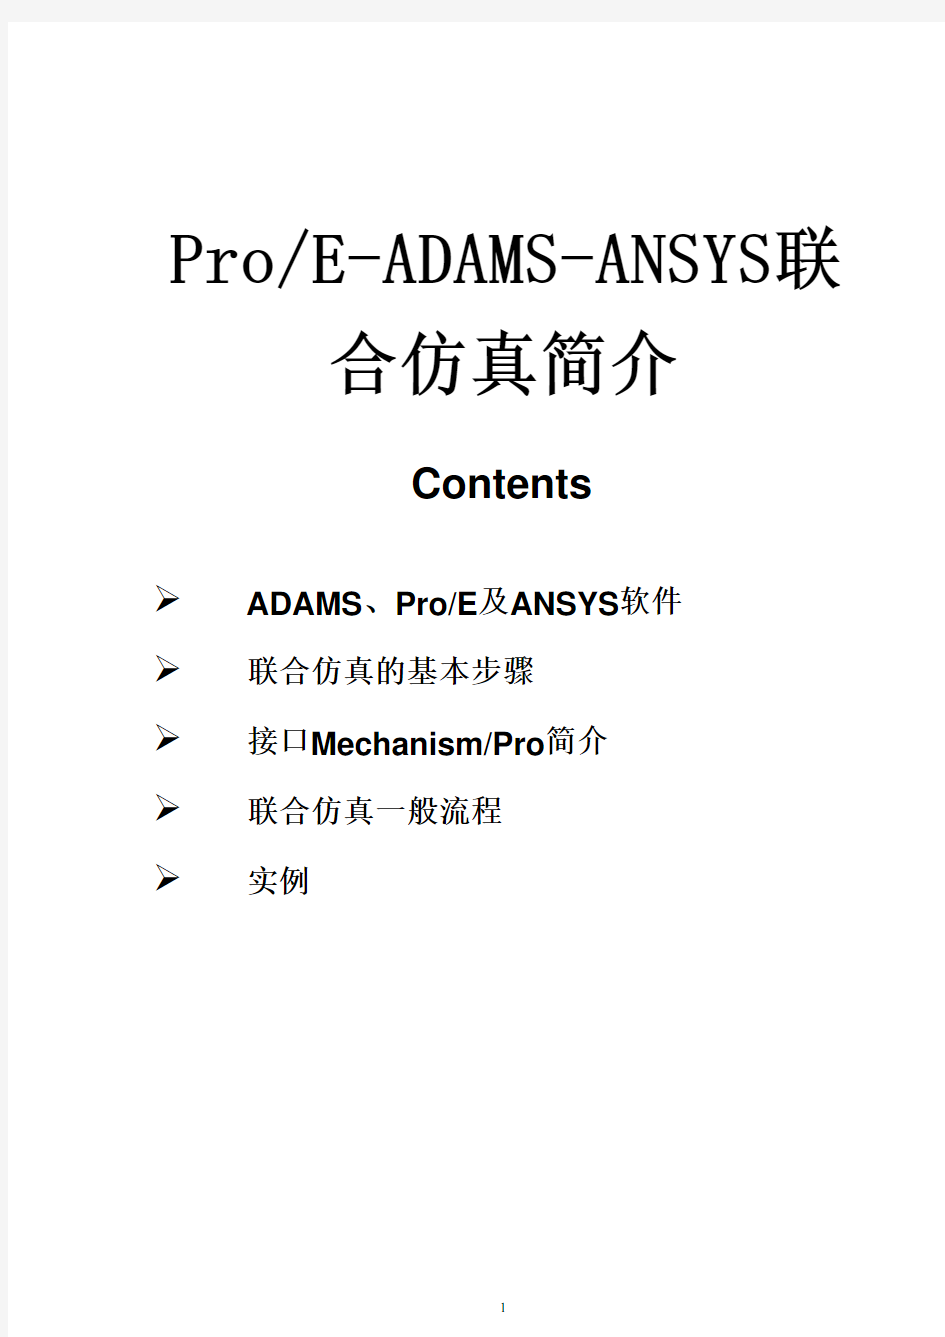 ProE-ADAMS-ANSYS联合仿真